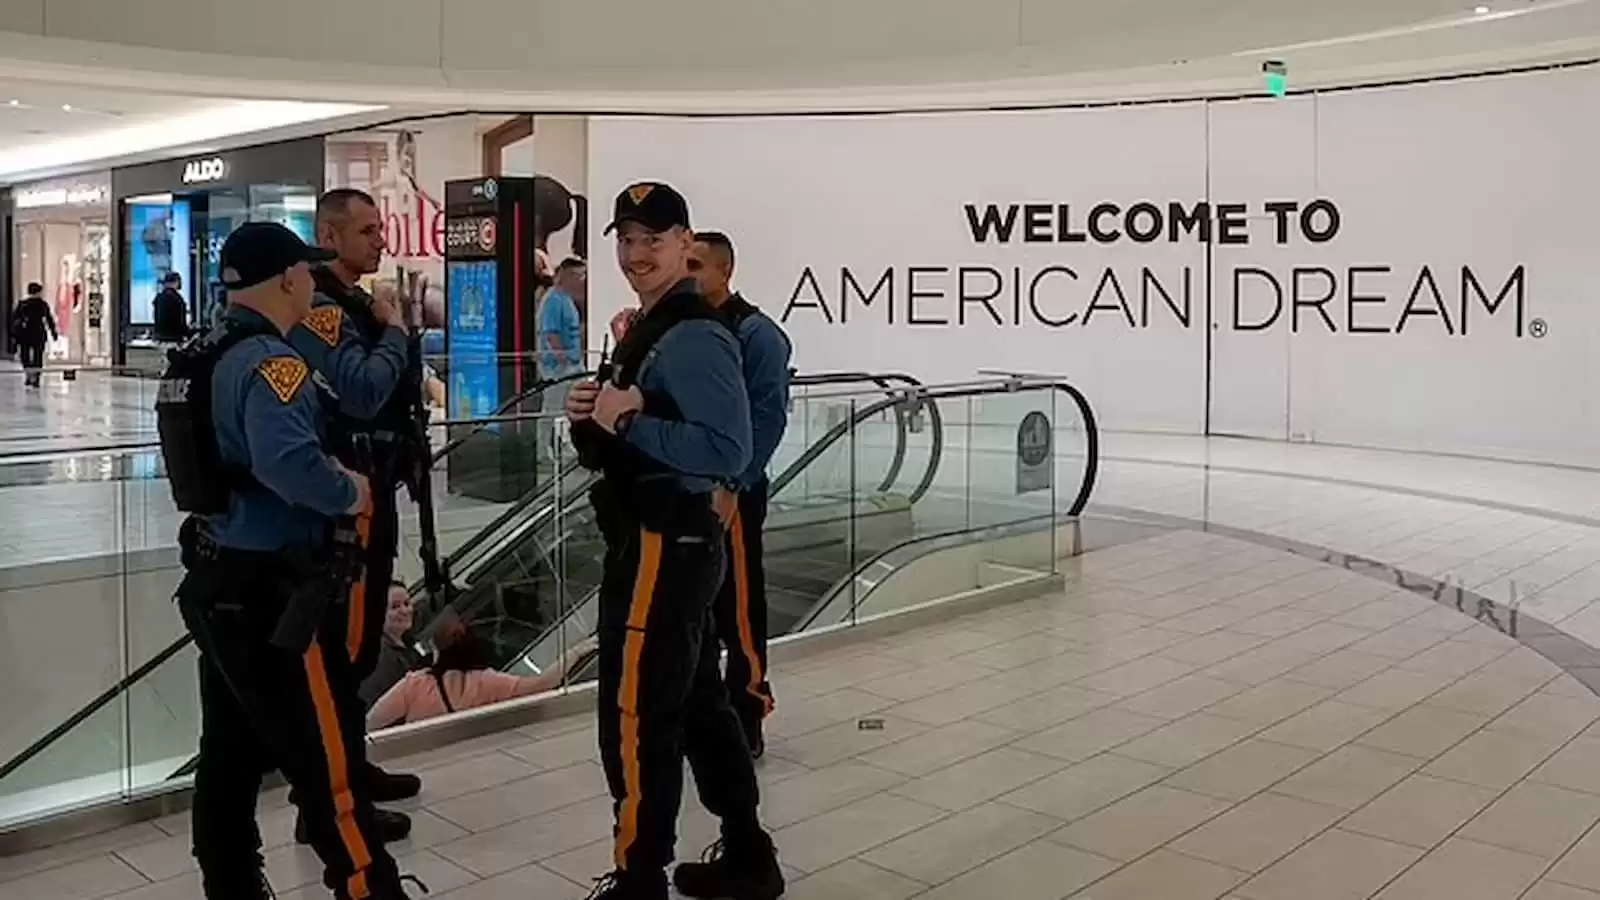 American Dream Mall New Jersey bomb threat Black Friday sales evacuation